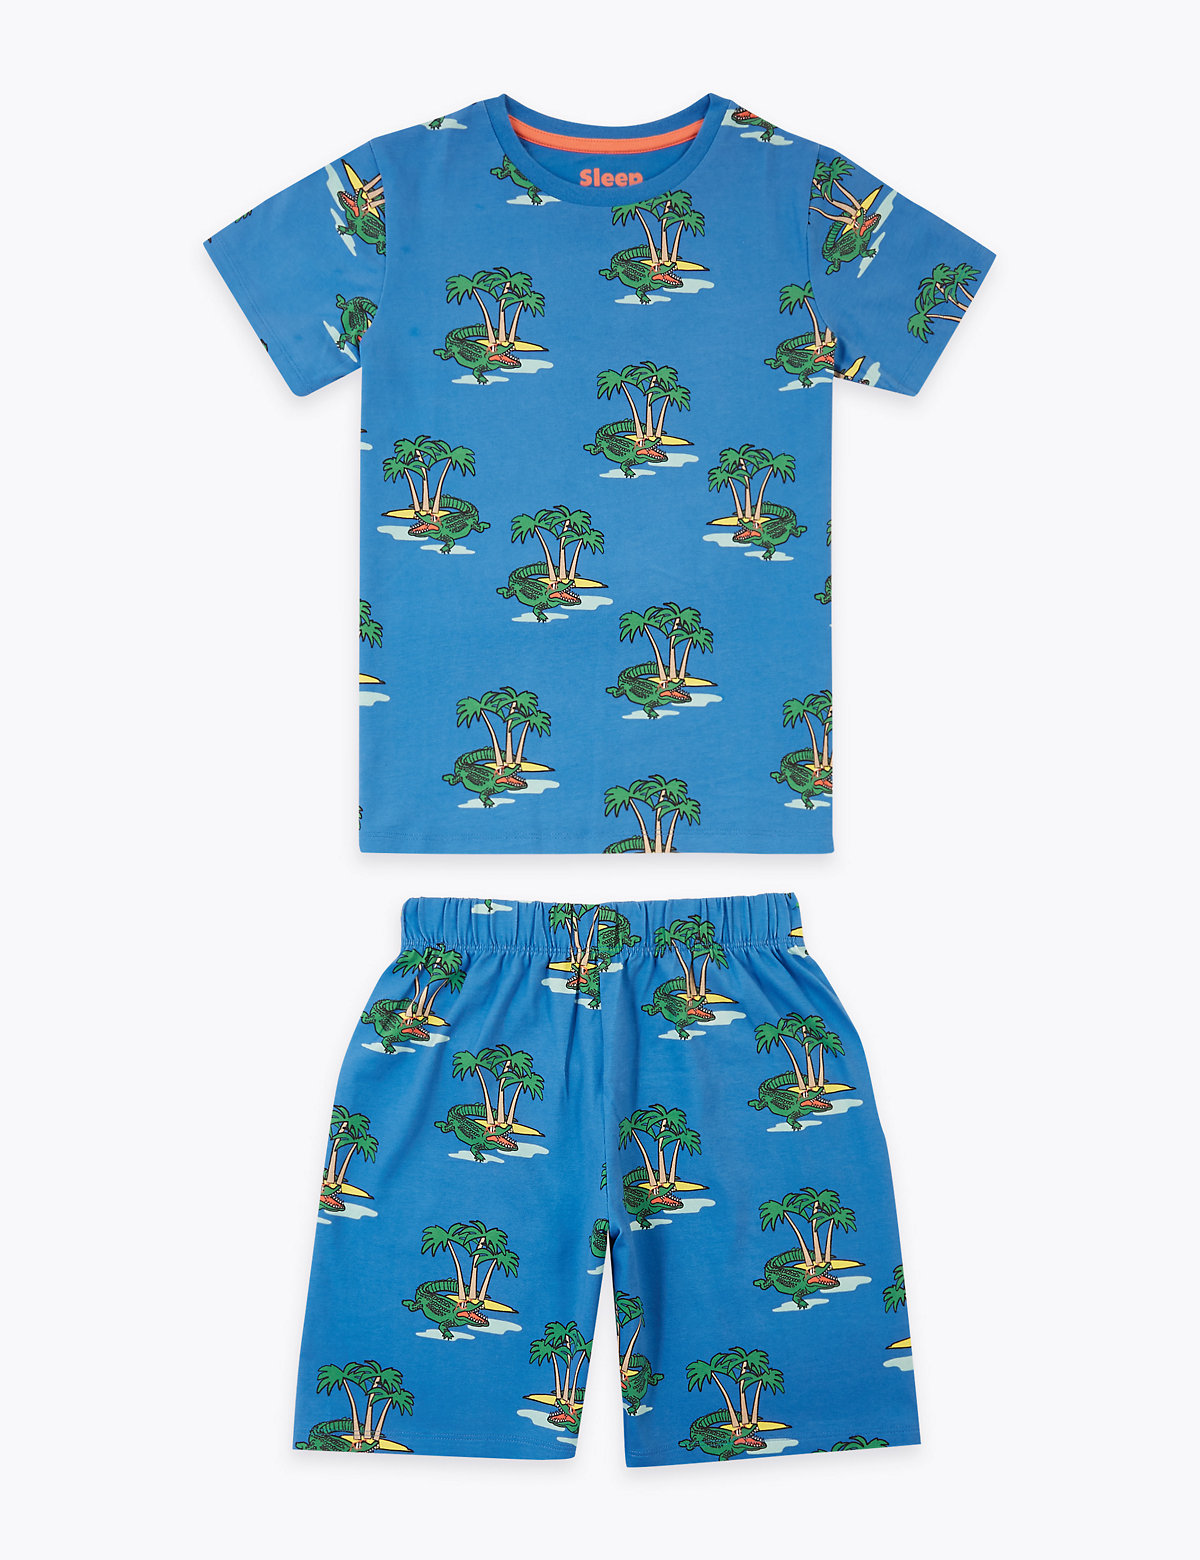 Cotton Crocodile Print Short Pyjama Set (7-16 Yrs)